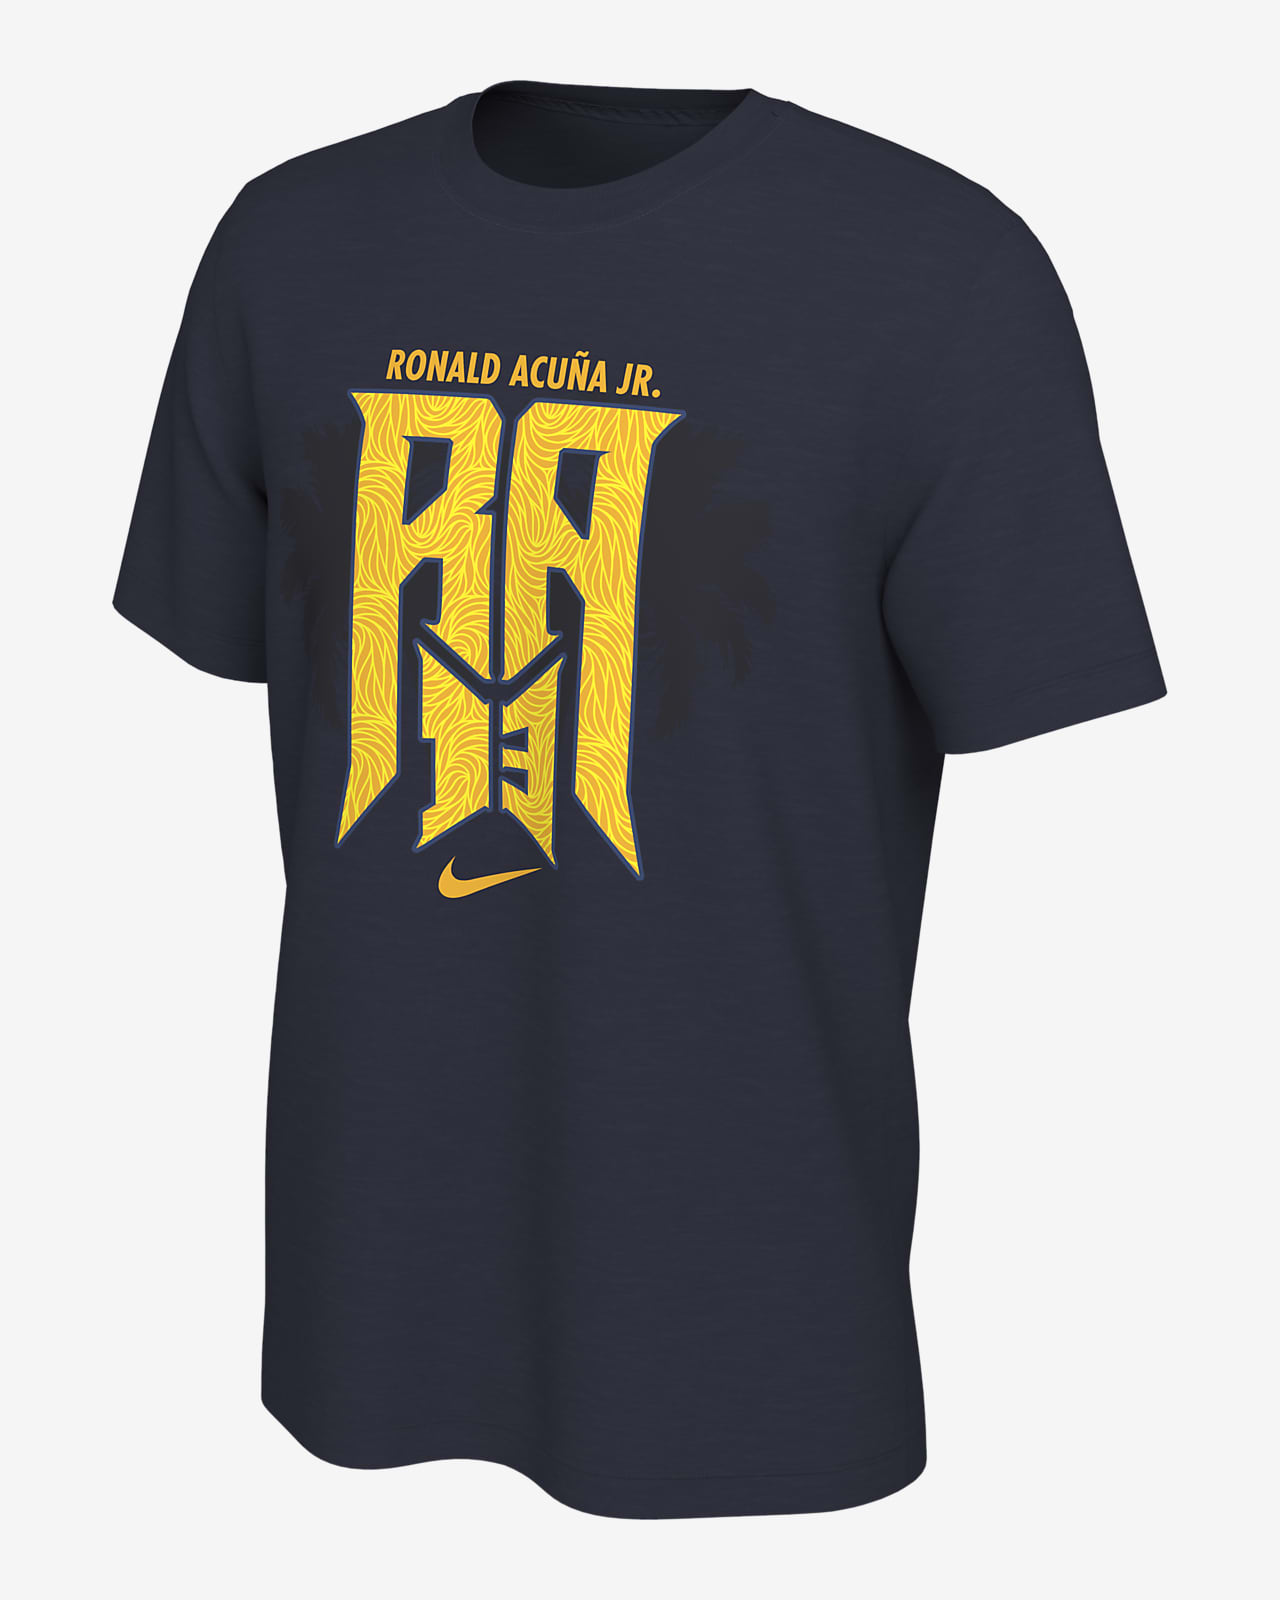 Ronald Acuña Jr. Men's Nike Baseball T-Shirt